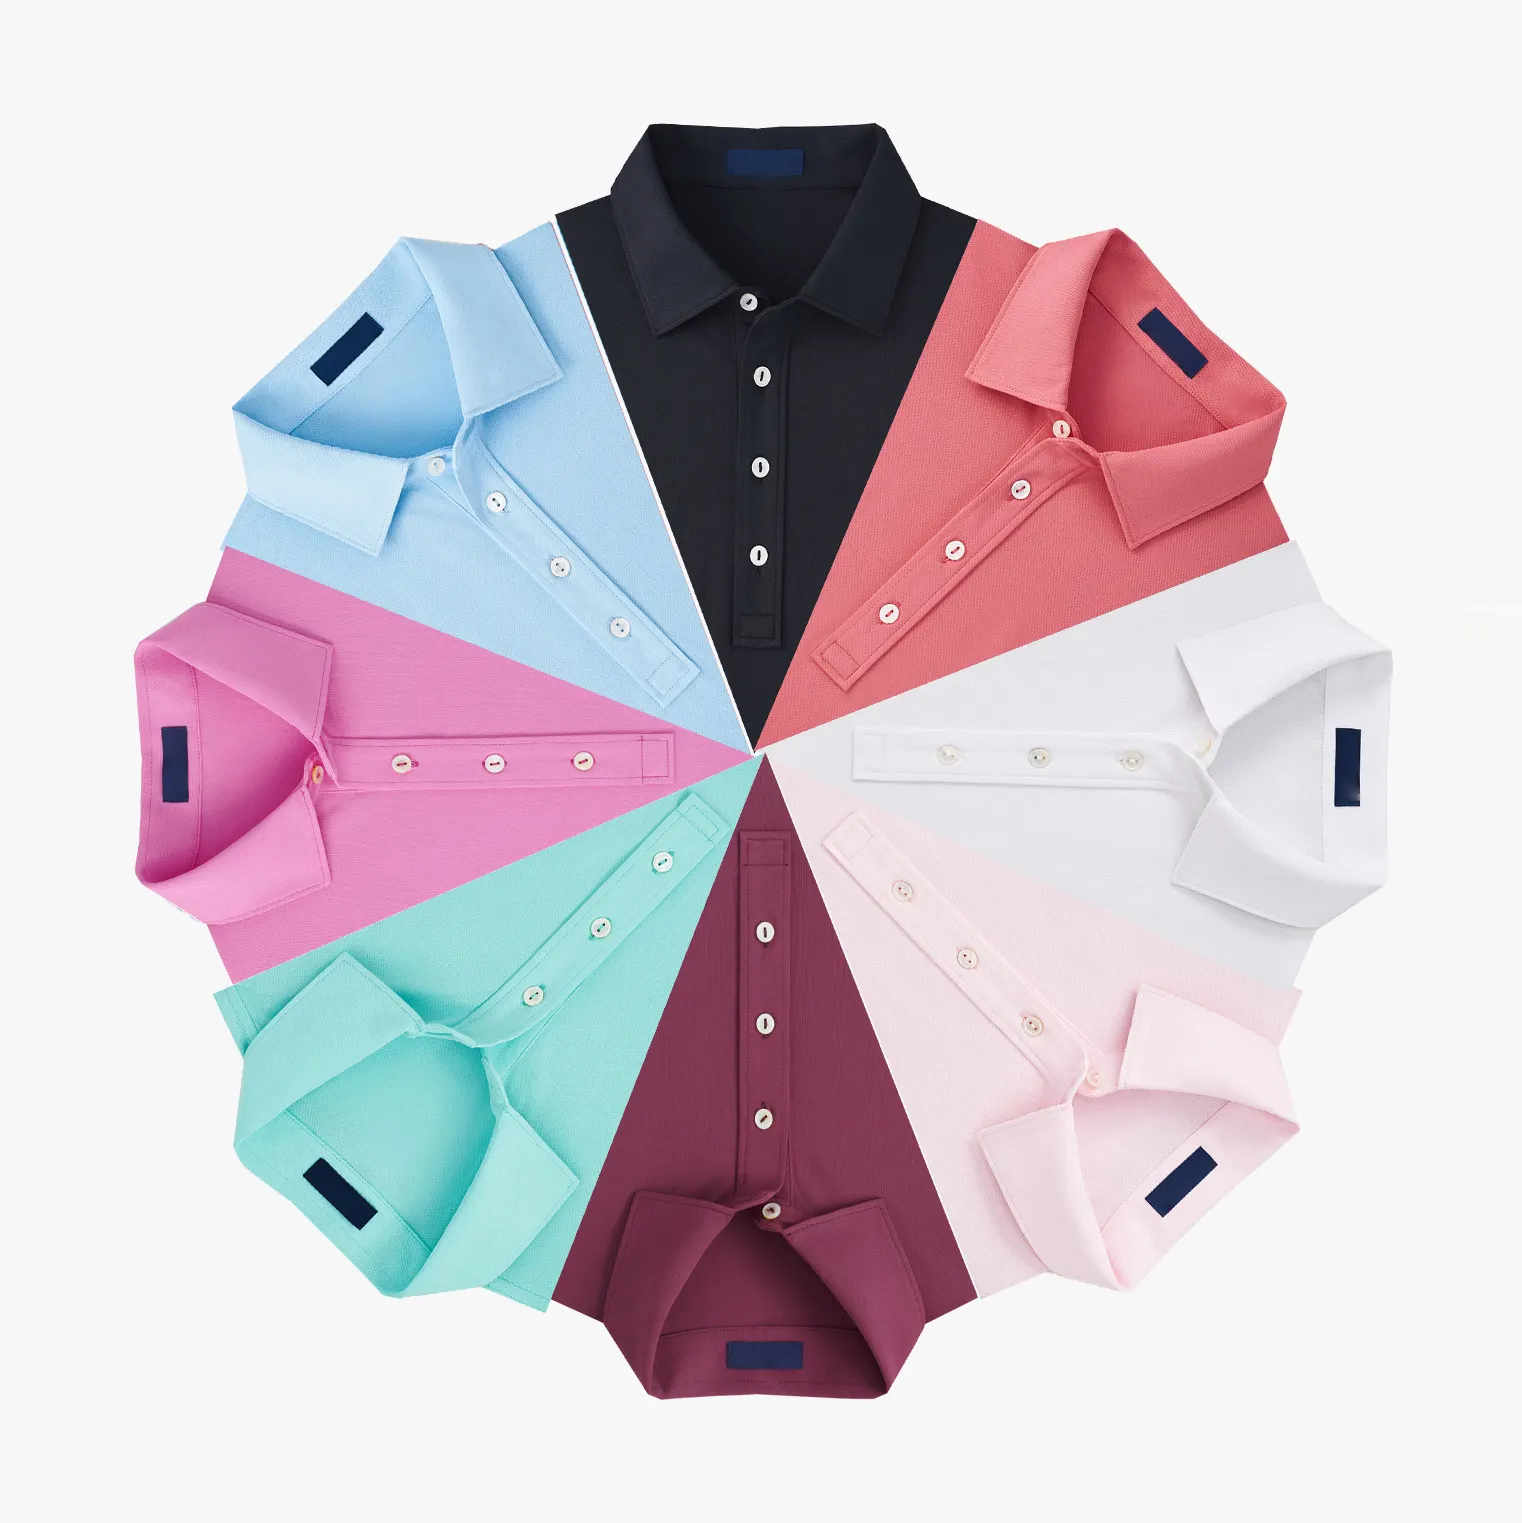 नई डिजाइन थोक ओईएम गोल्फ टीशर्ट पोलो शर्ट फिट विंटेज गोल्फ पोलो शर्ट पुरुषों के लिए त्वरित सूखी कस्टम लोगो निजी लेबल